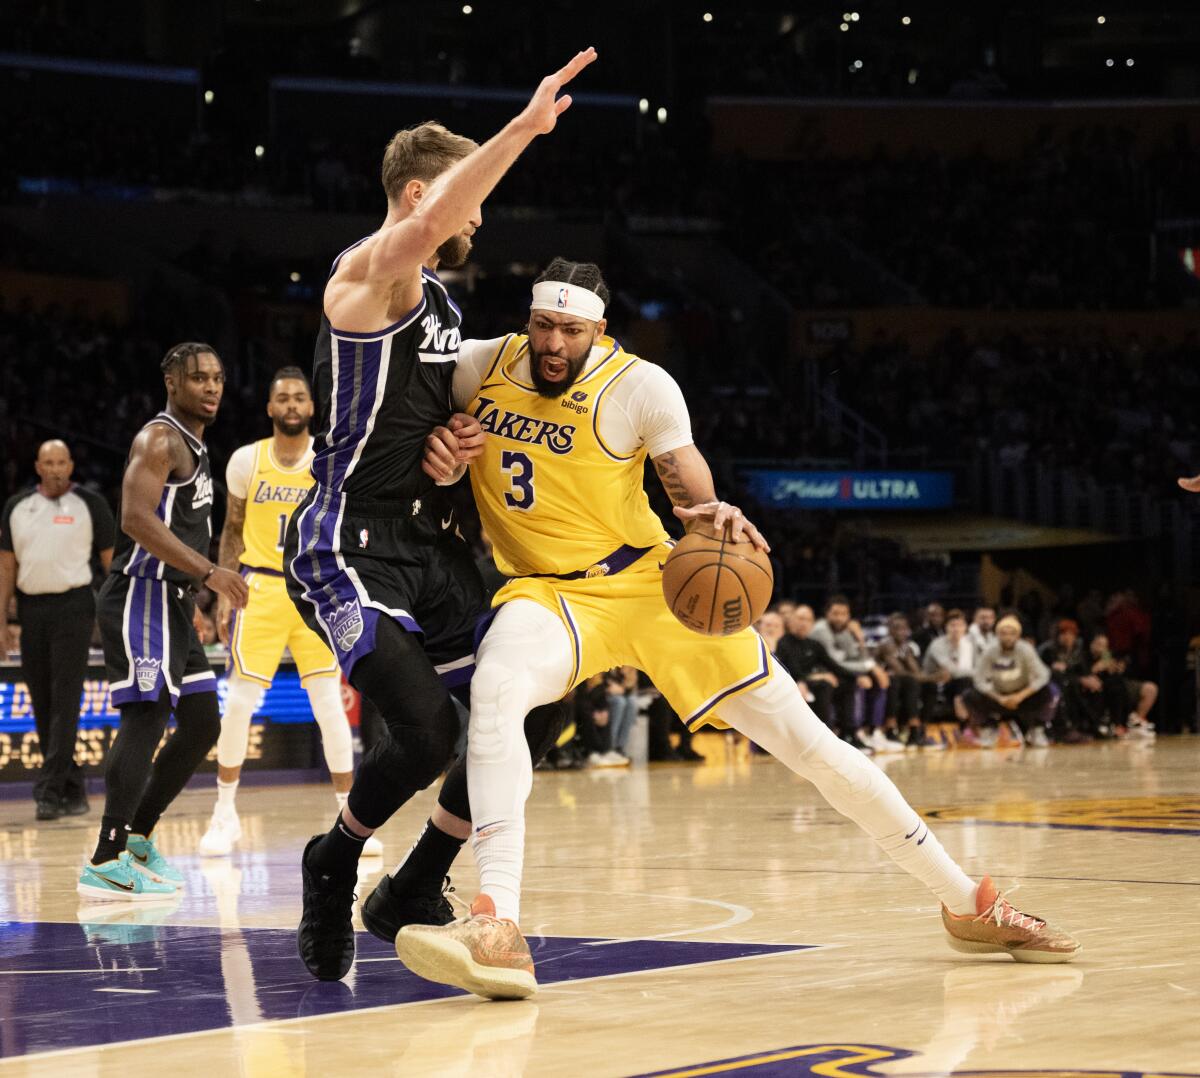 Kings forward Domantas Sabonis plays tight defense on Lakers forward Anthony Davis.